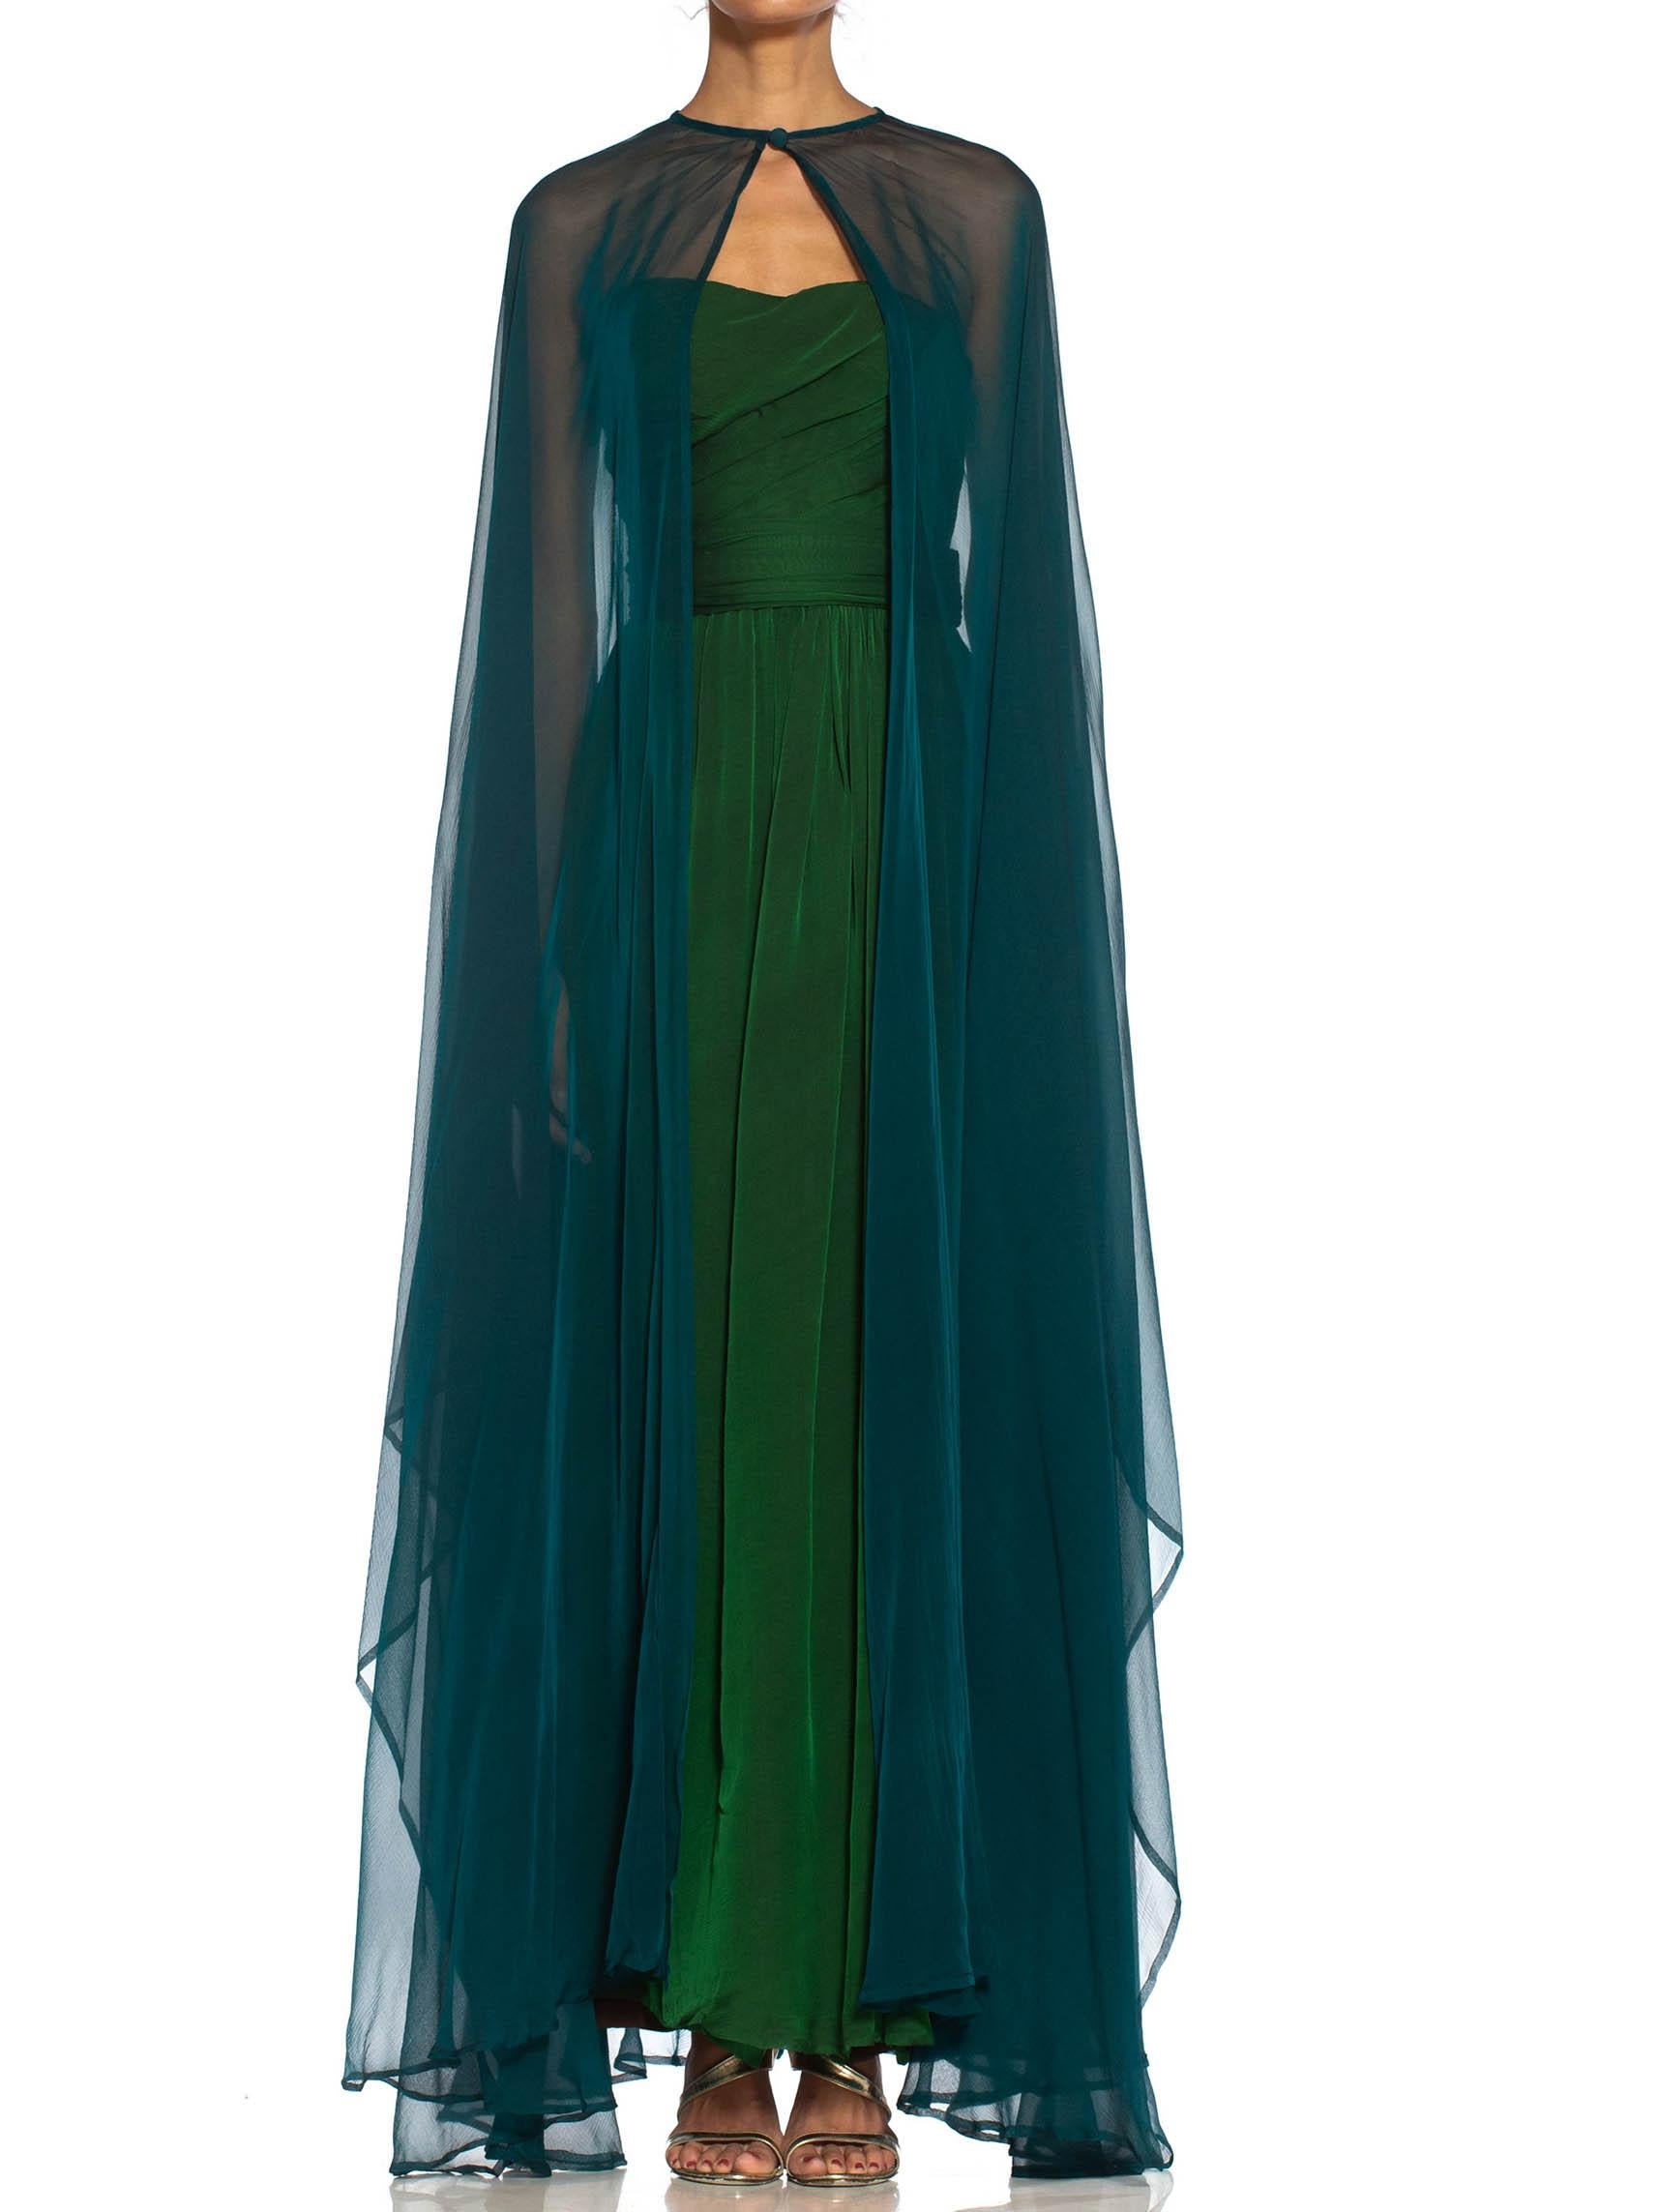 saint laurent green dress